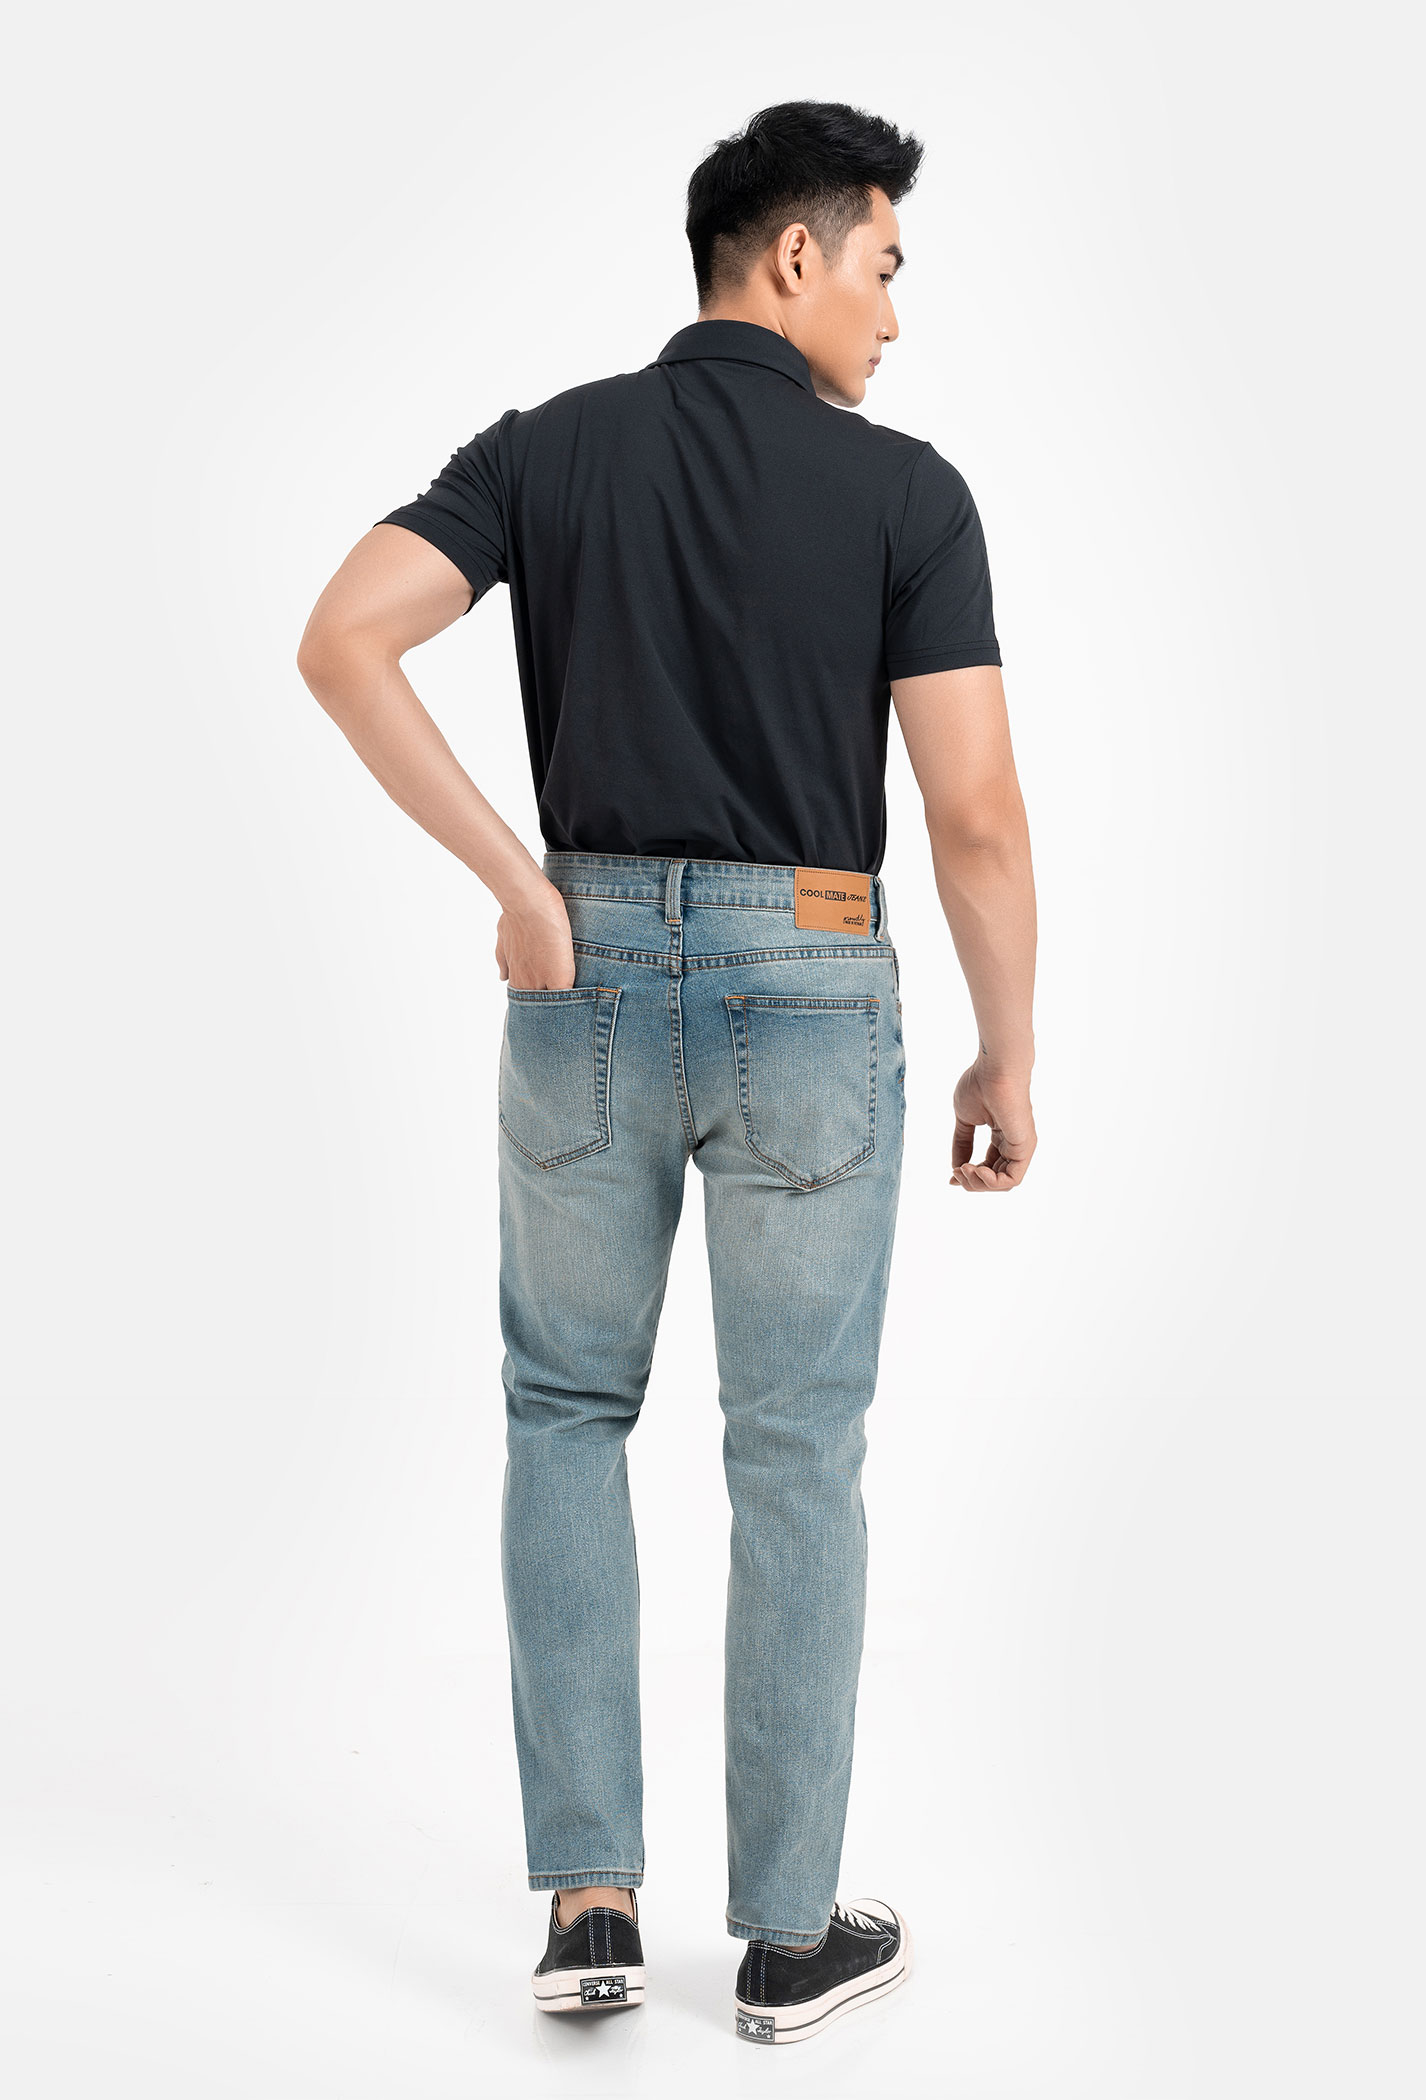 OUTLET - Quần Jeans Basic Slim V2 Xanh nhạt 2